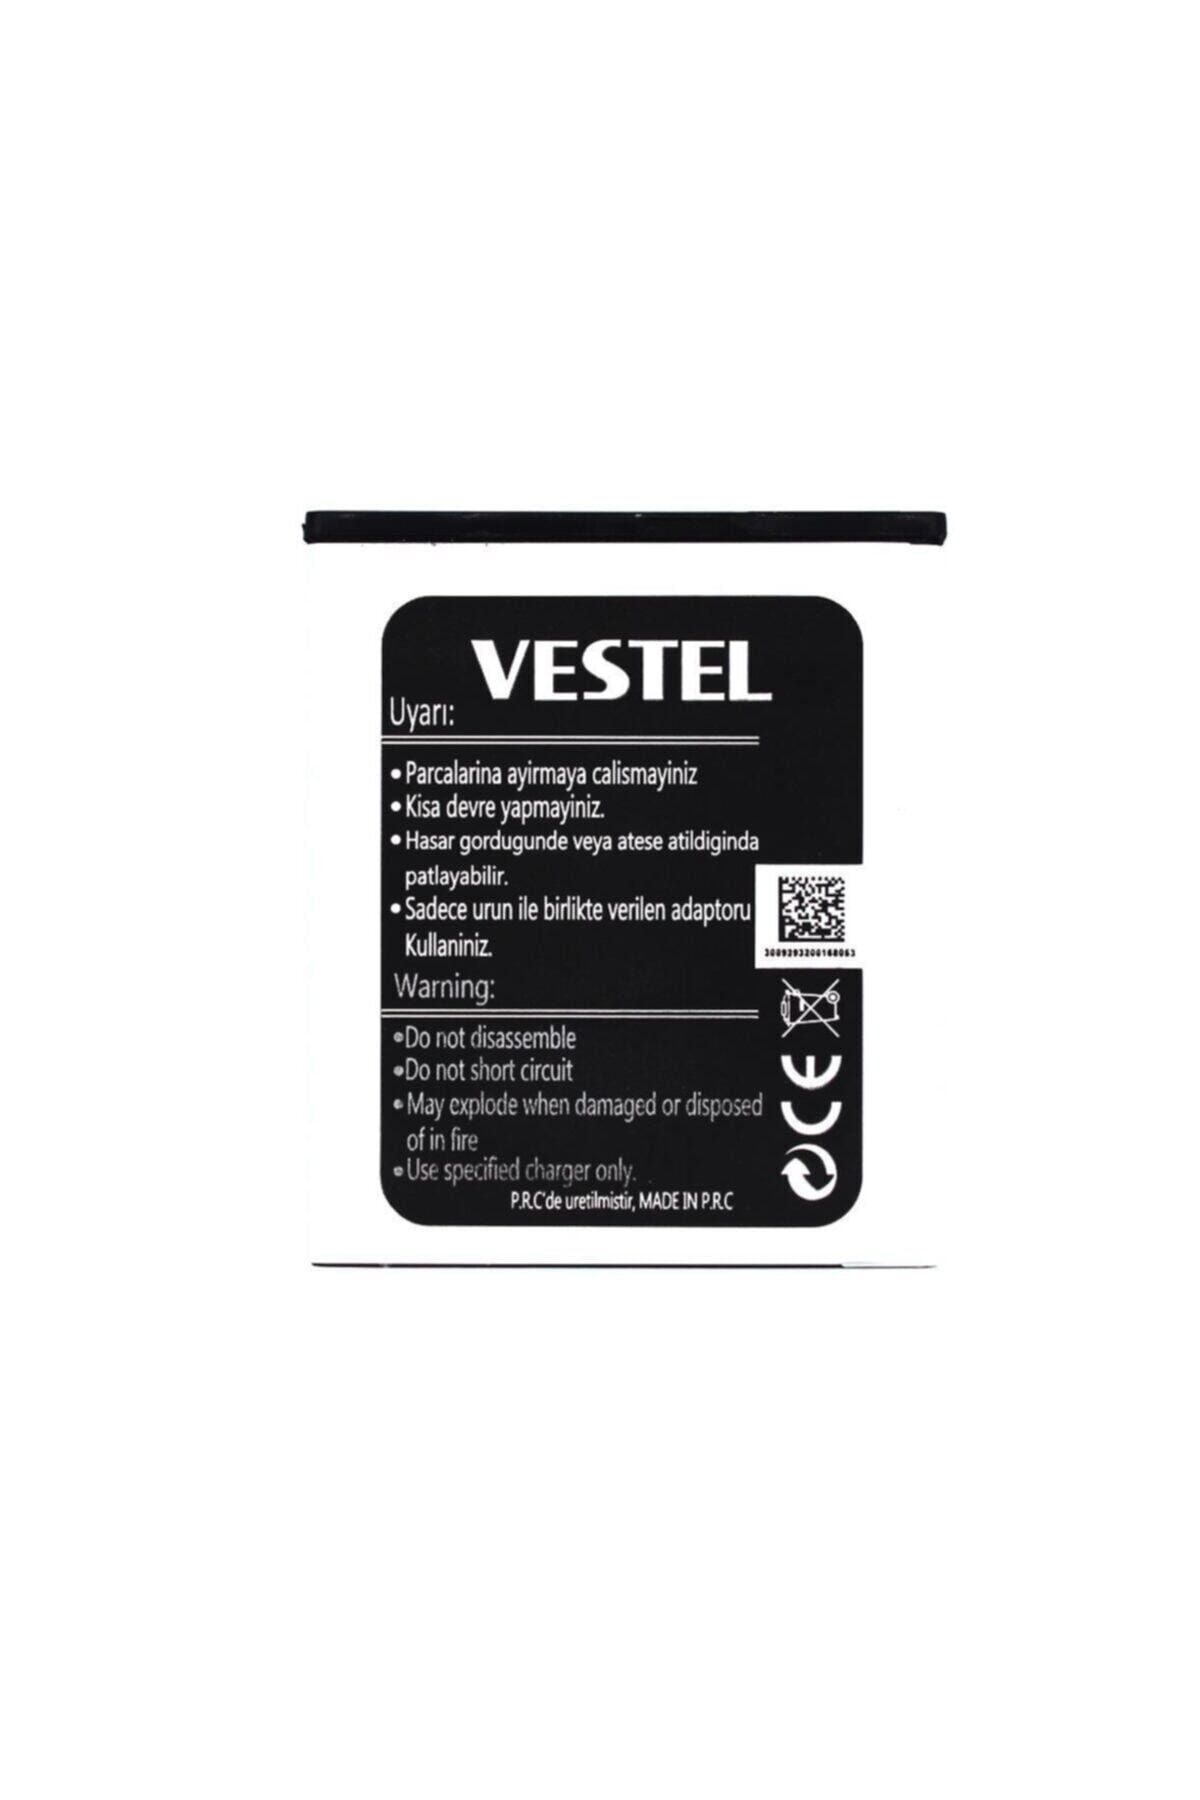 VESTEL V3 5010 Batarya Pil A++ Lityum Polimer Pil